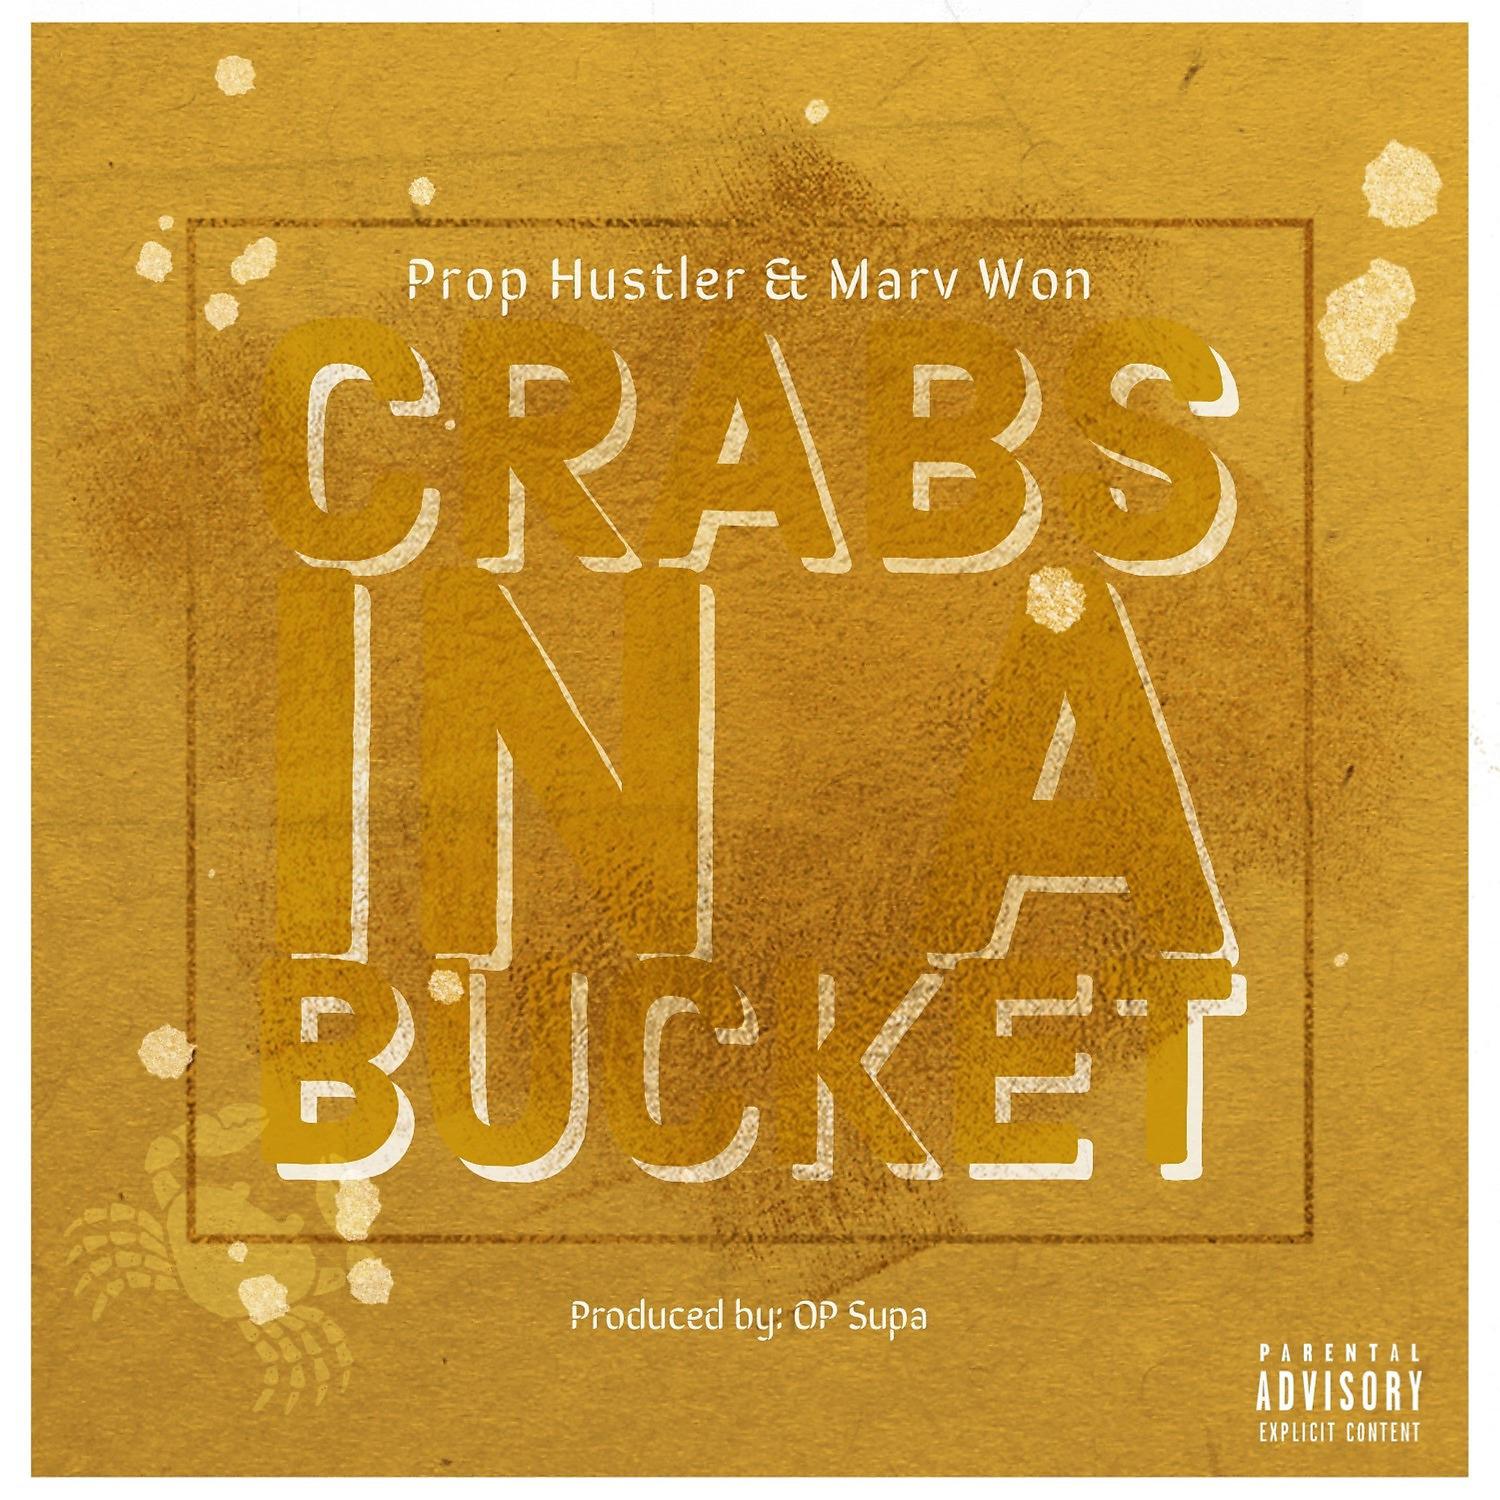 Постер альбома Crabs in a Bucket